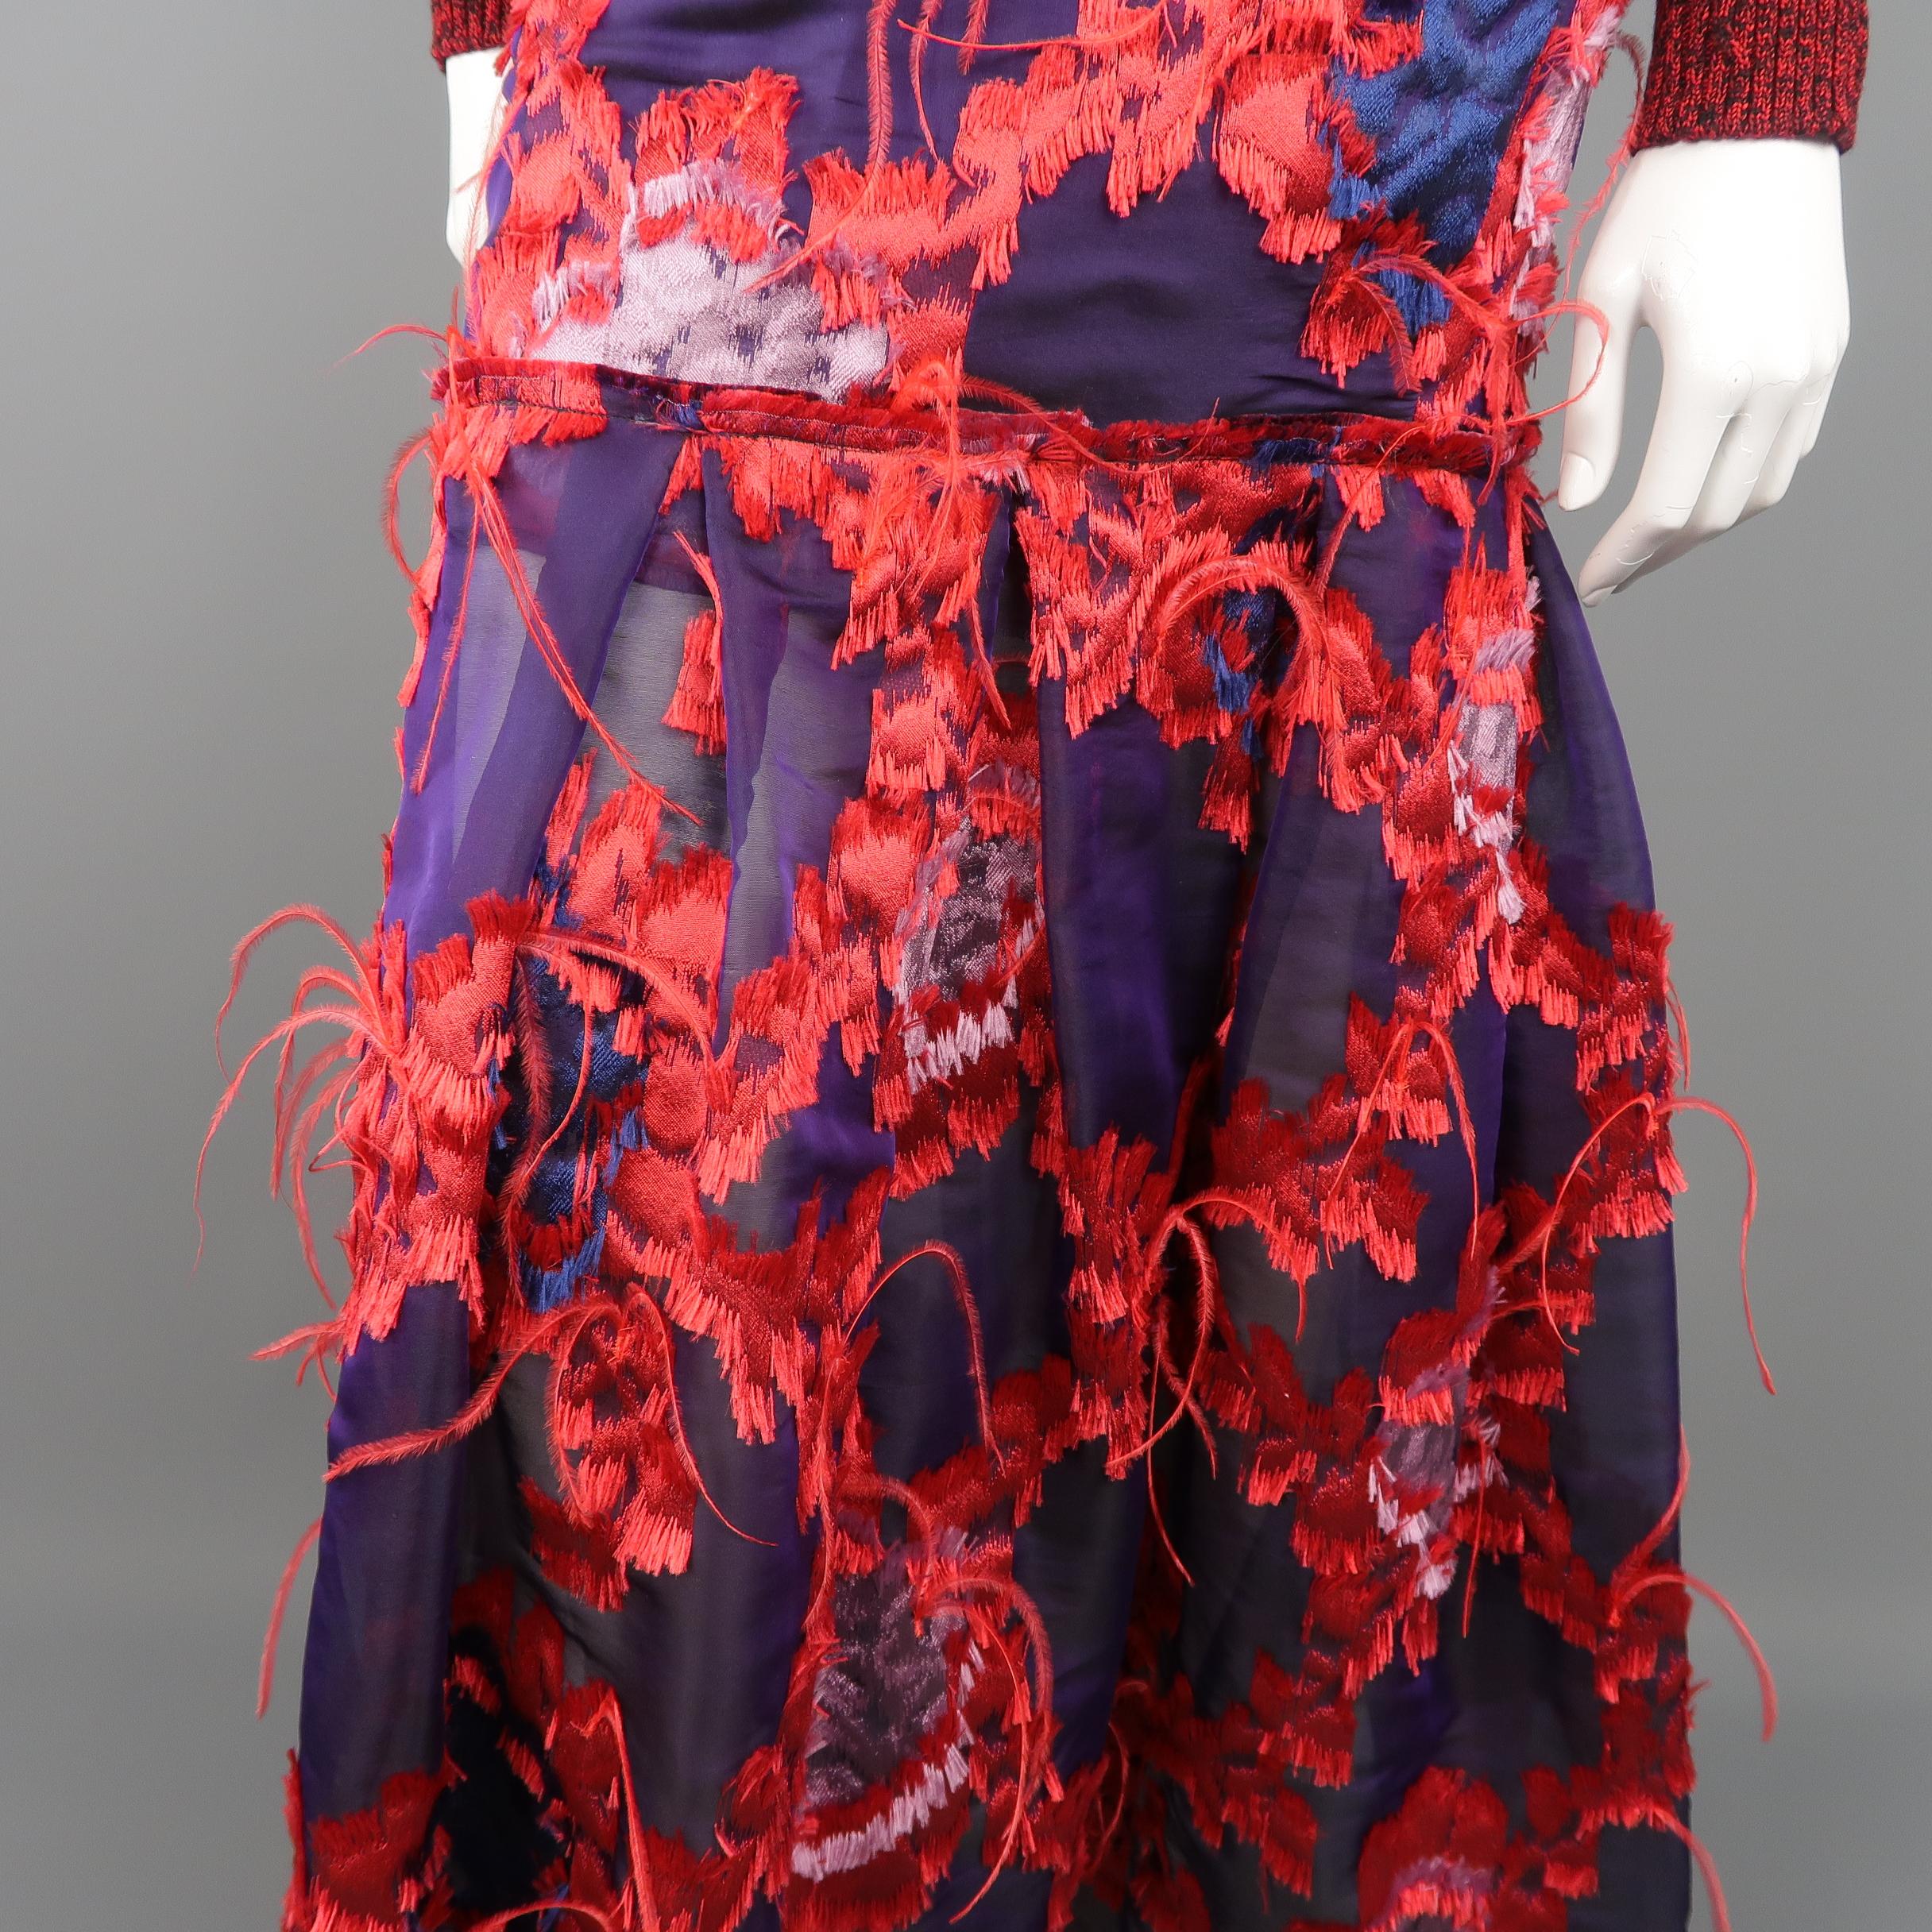 ERDEM Gown - Fall 2015 Runway - Red, Purple, Knit, Taffeta Feather Evening Dress 3